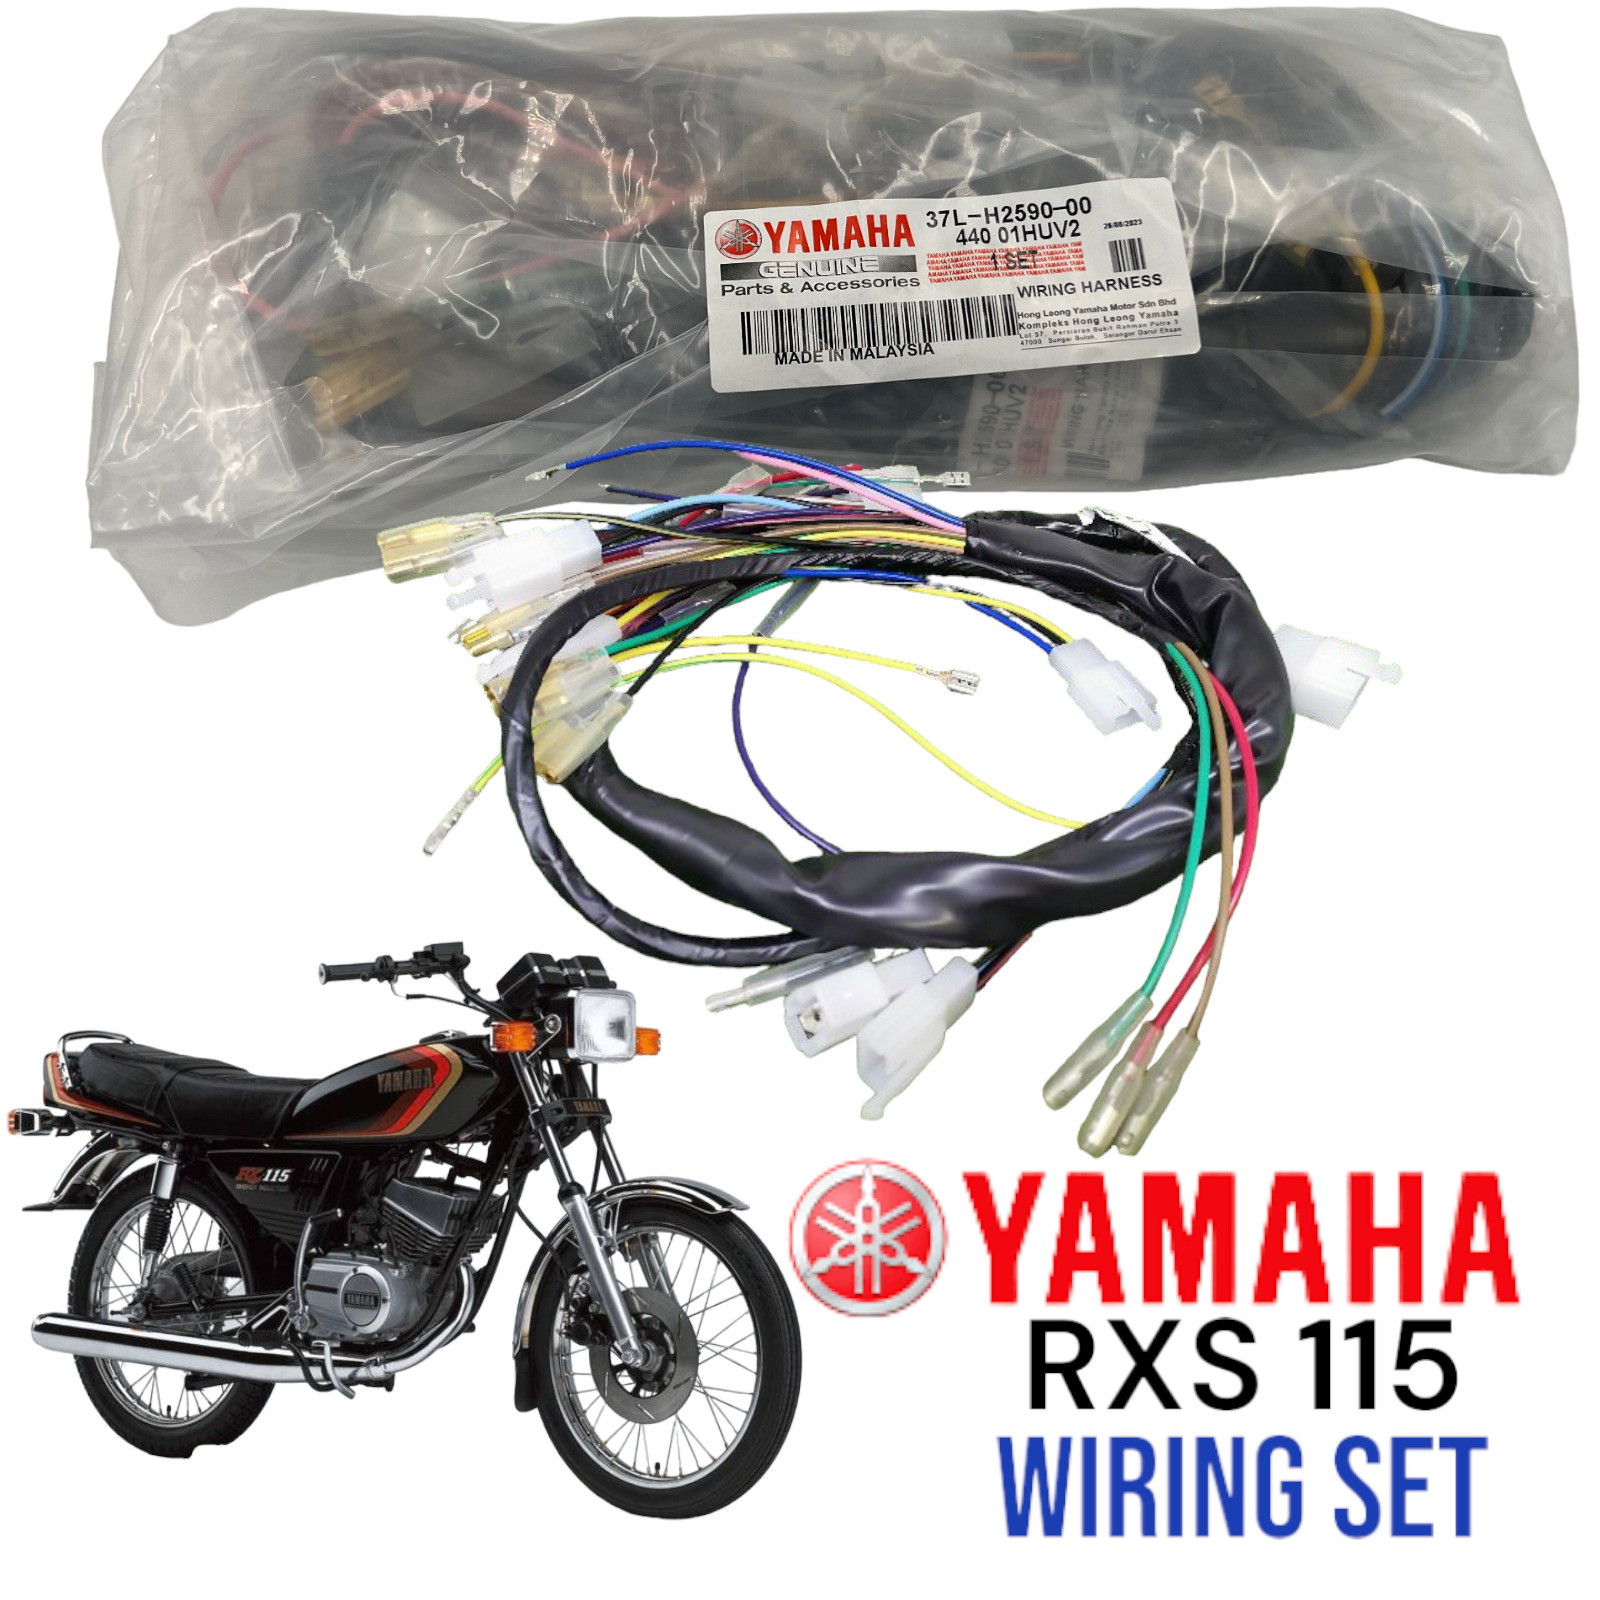 Yamaha RXS115 RXS 115 WIRING SET WIRING HARNESS BODY COMPLETE SET NEW